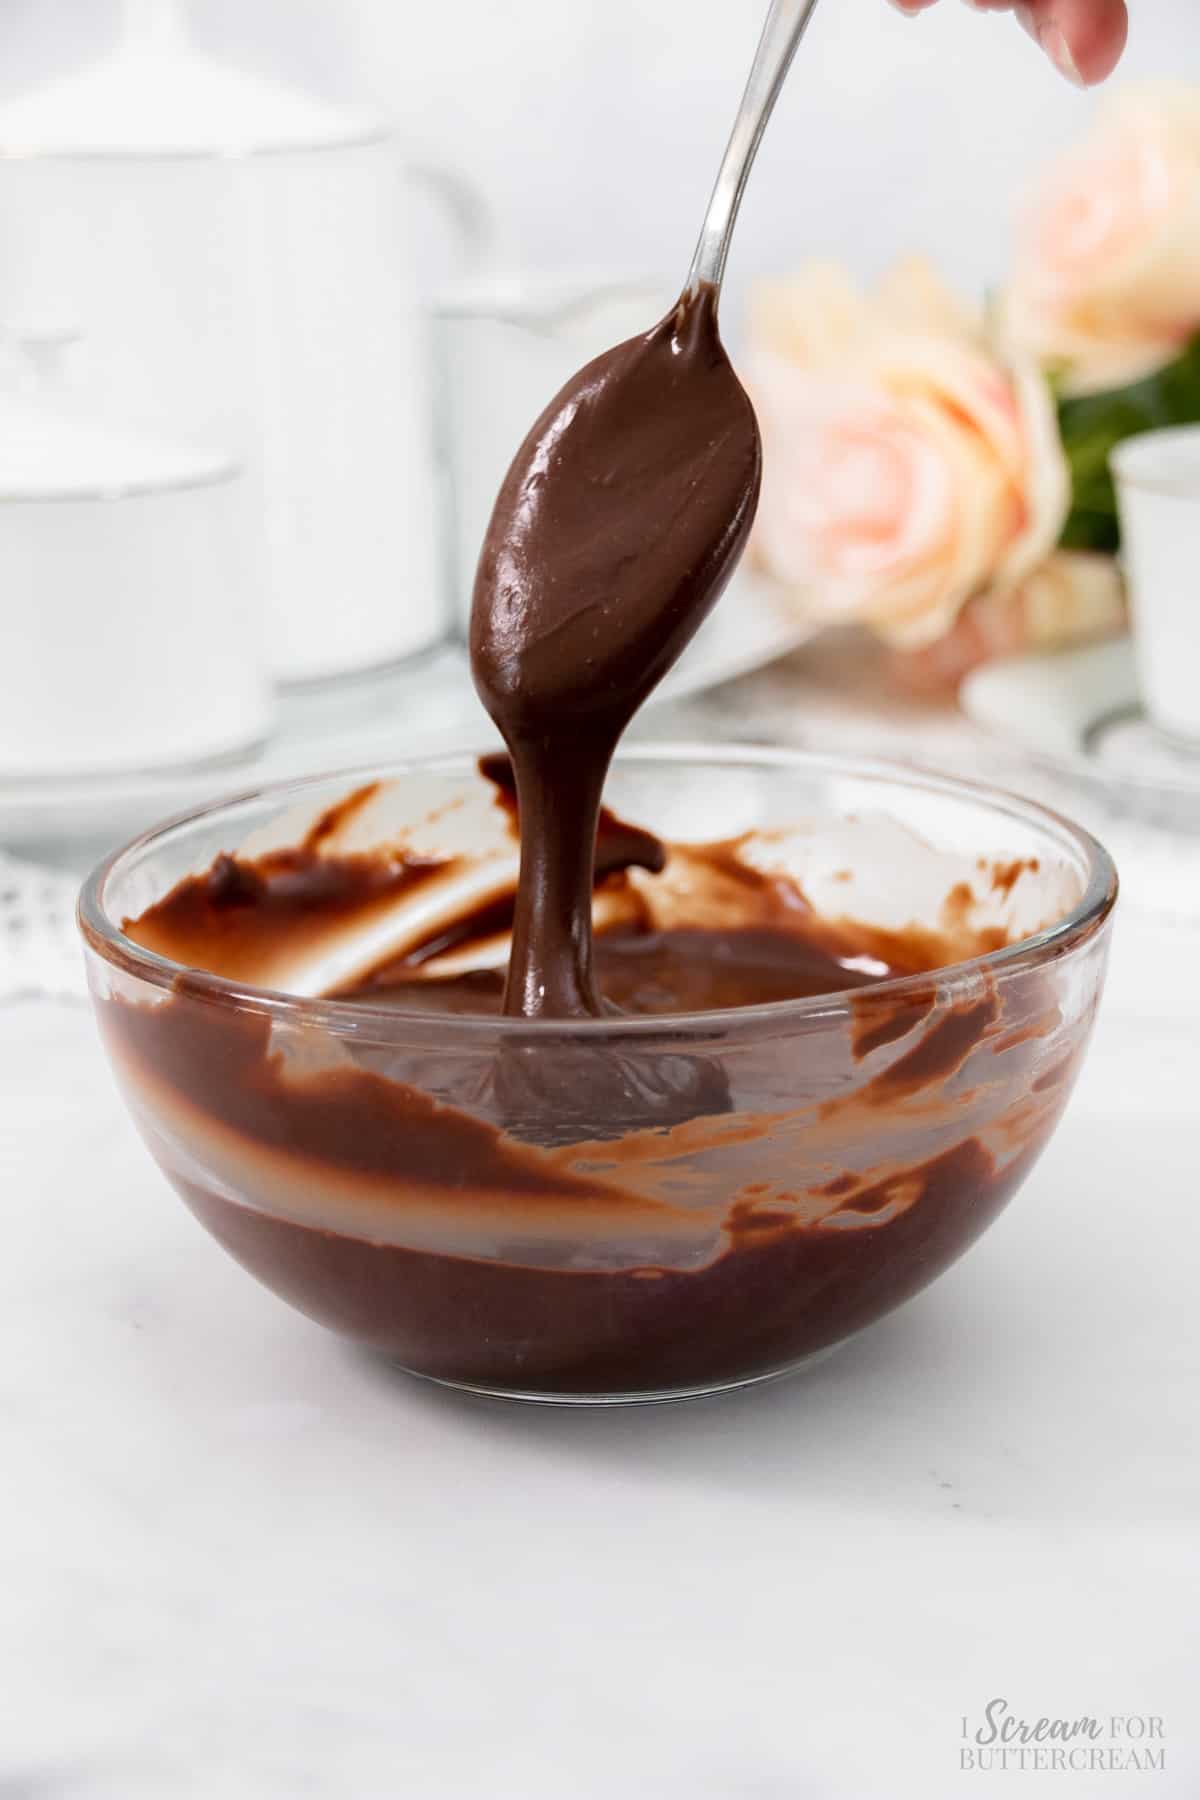 Chocolate glaze spooned into bowl.